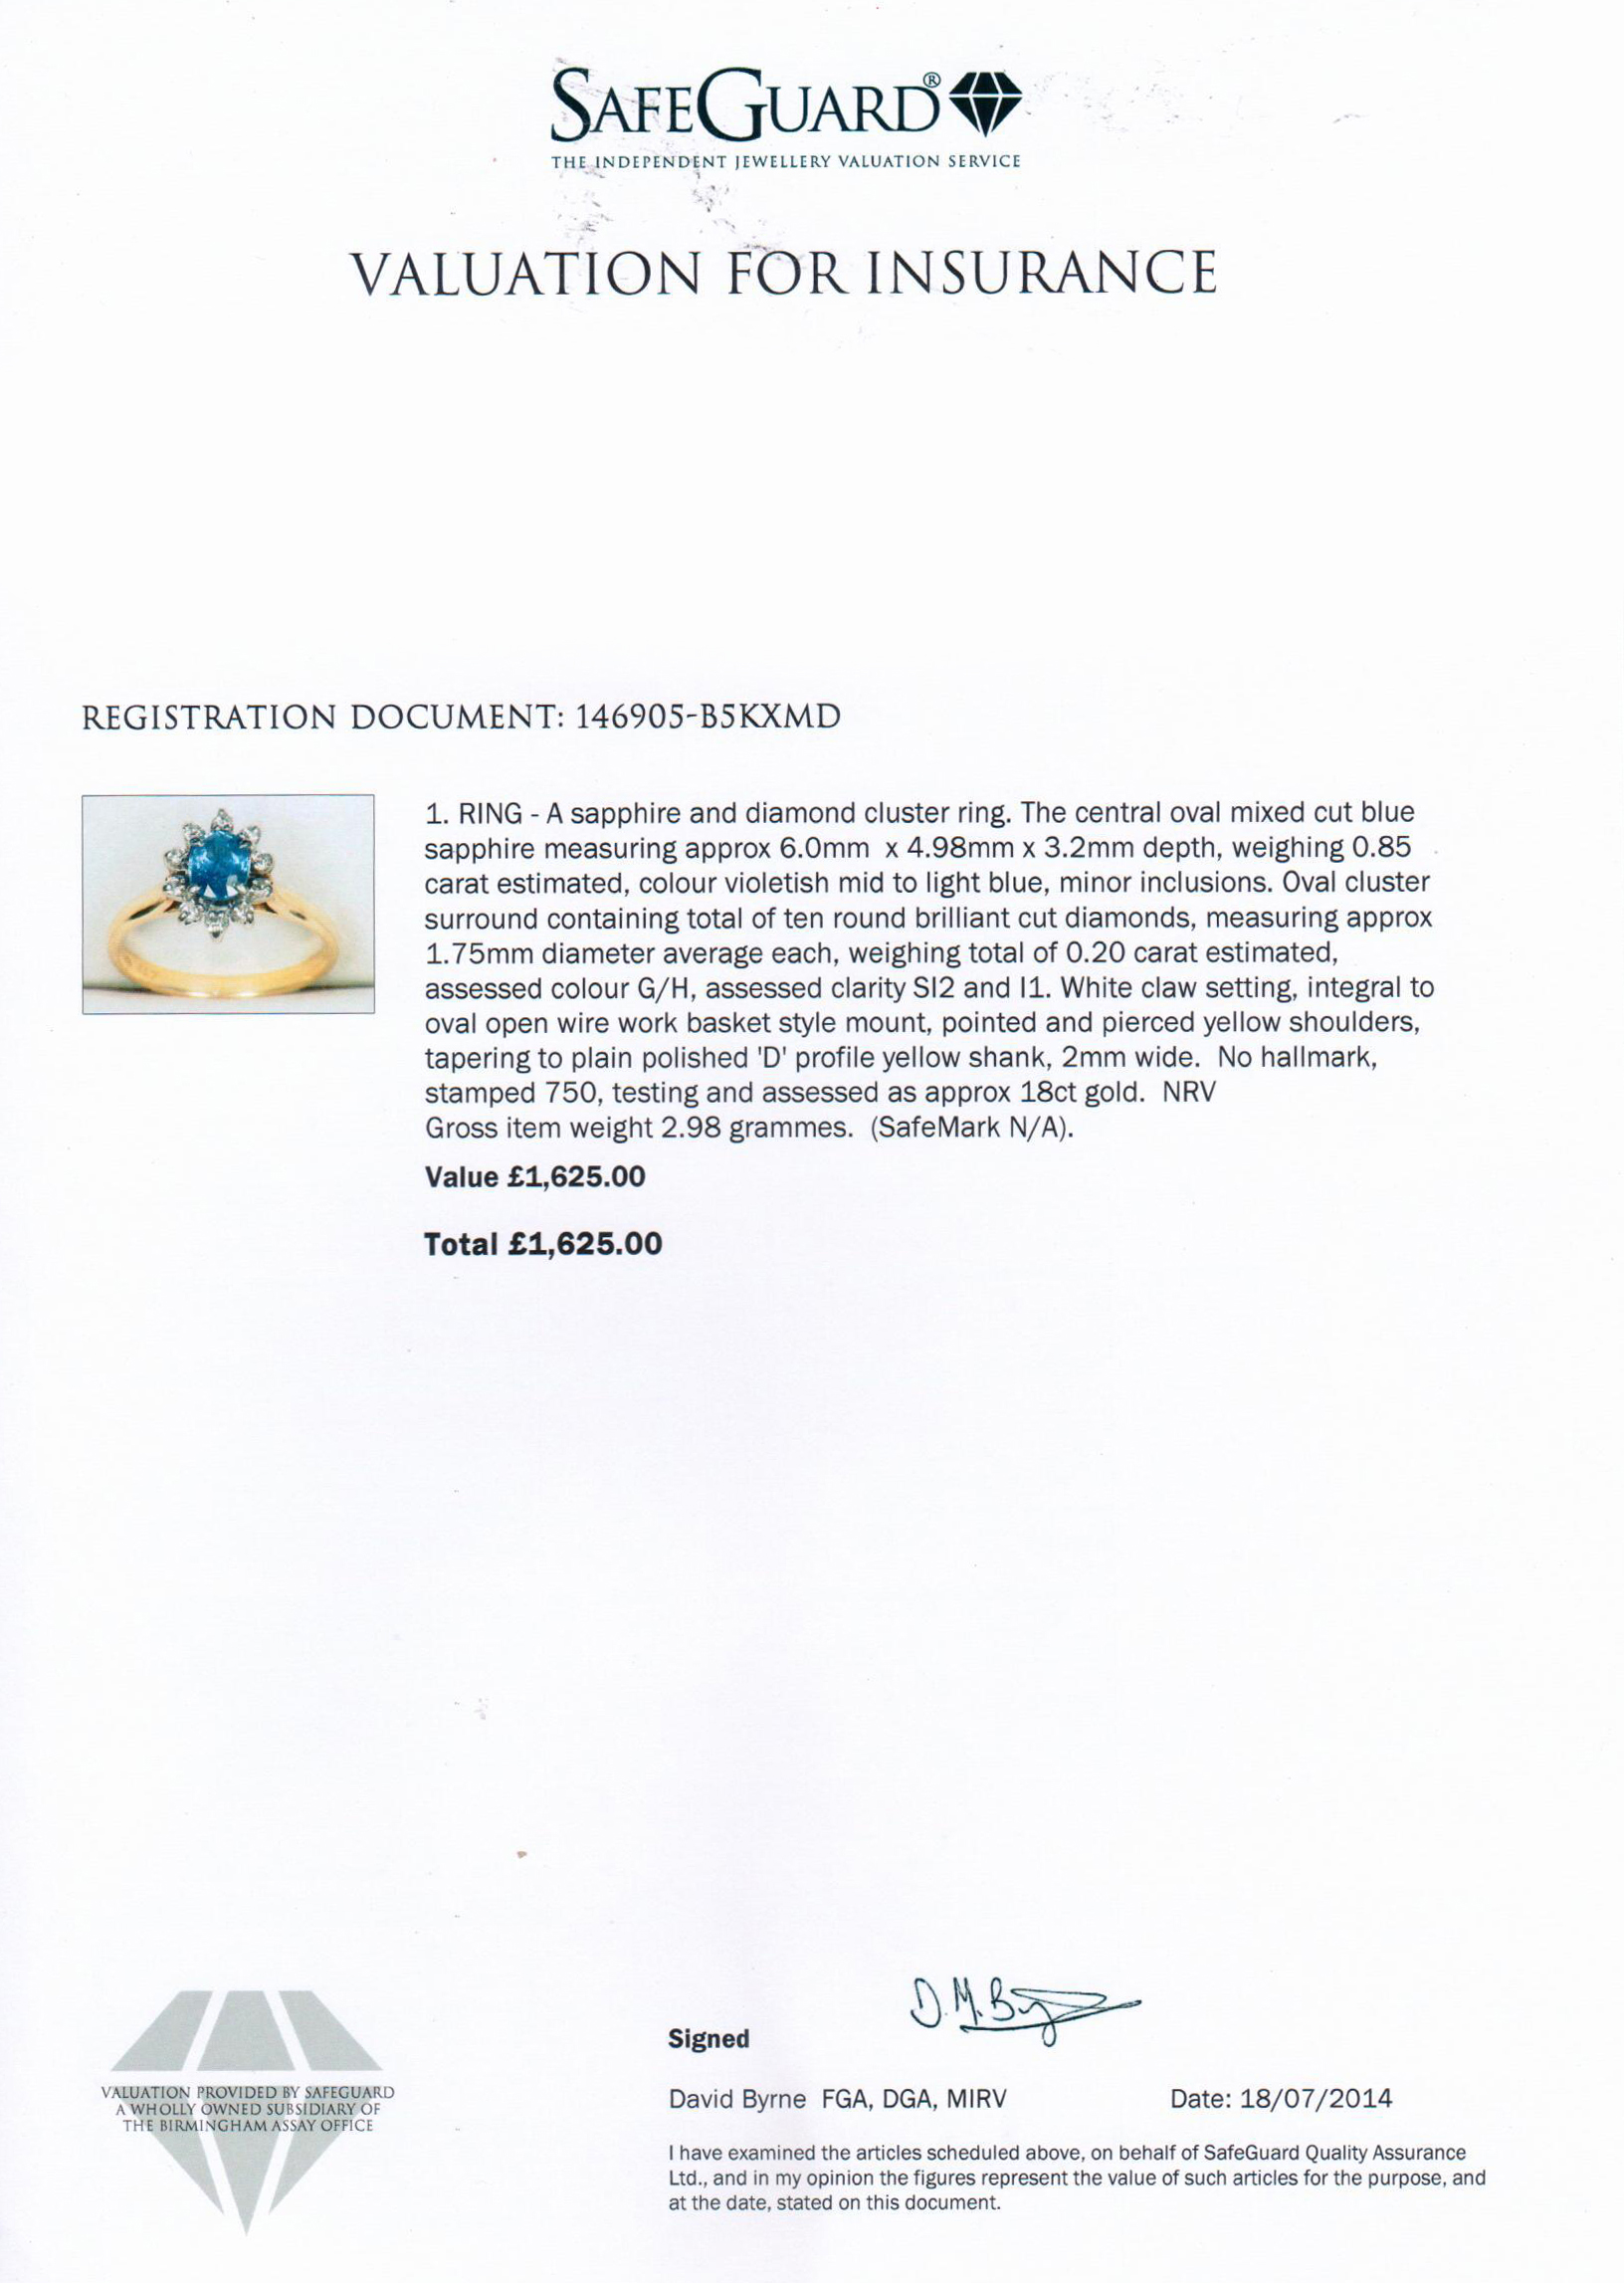 Cornflower Blue Sapphire & Diamond 18 ct. Cluster Ring - Image 6 of 11